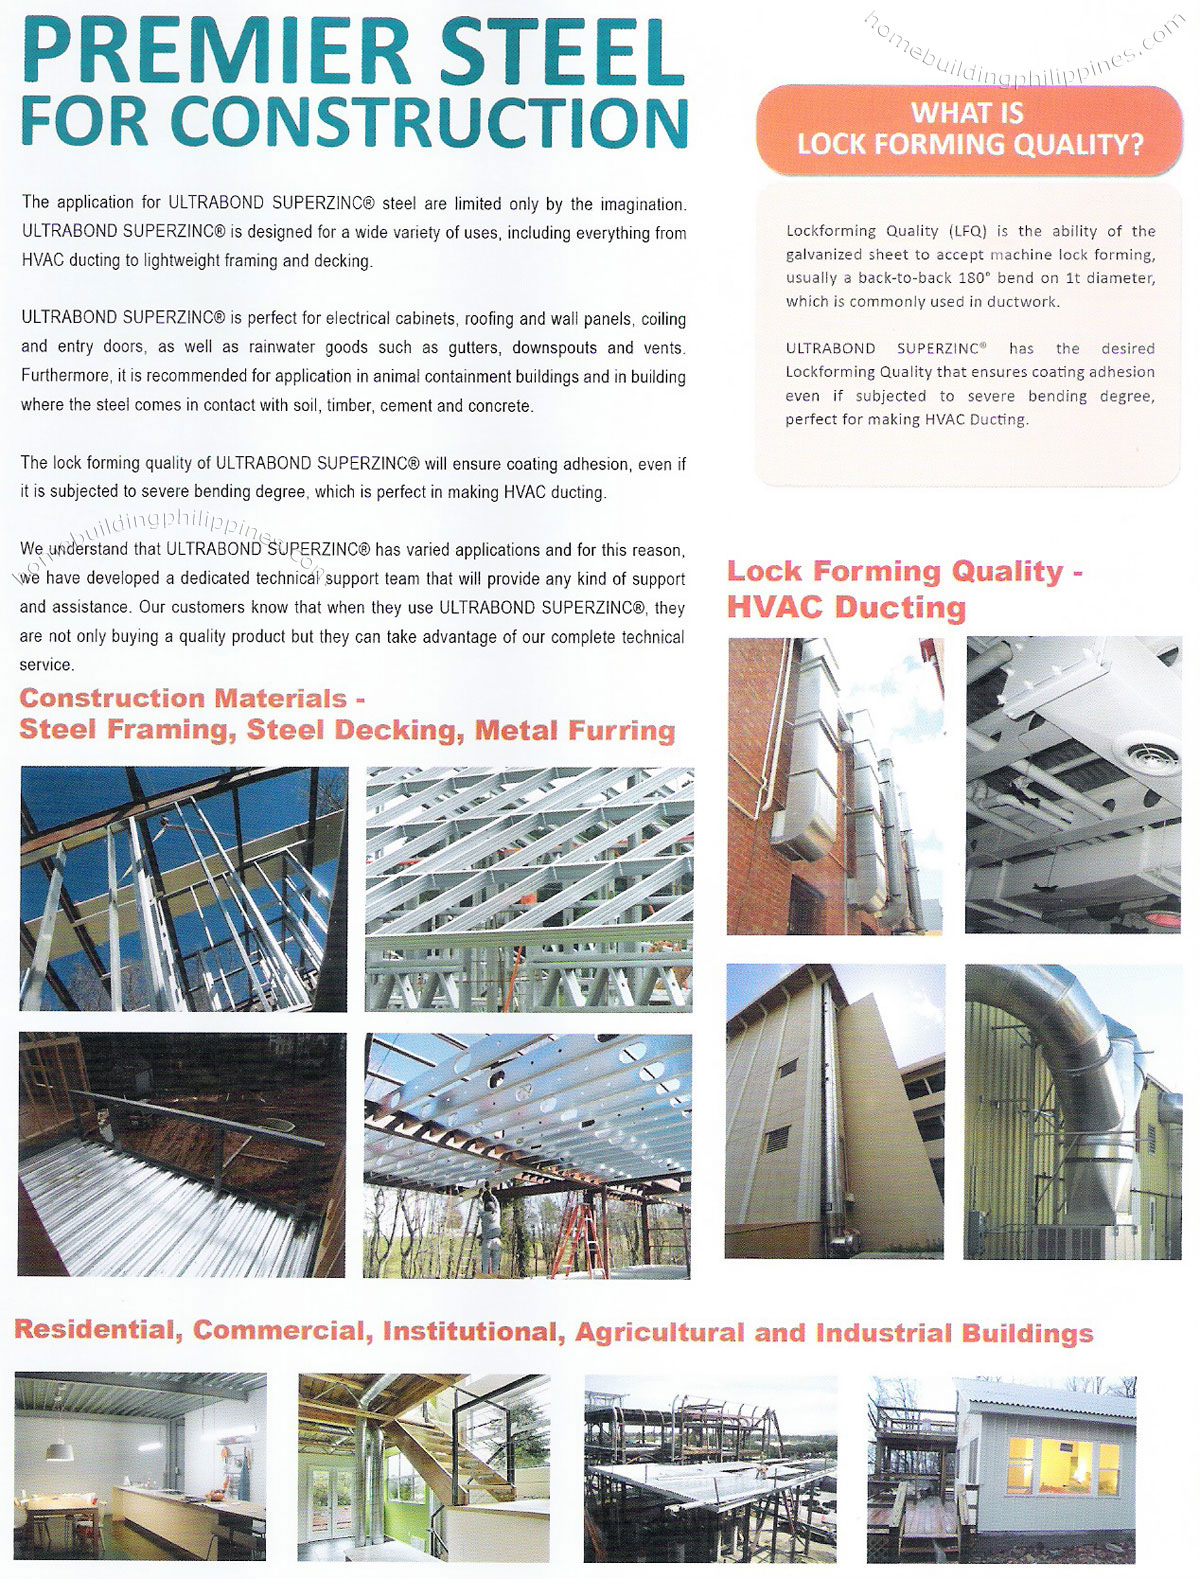 ultrabond steel construction applications hvac ducting lightweight framing decking furring